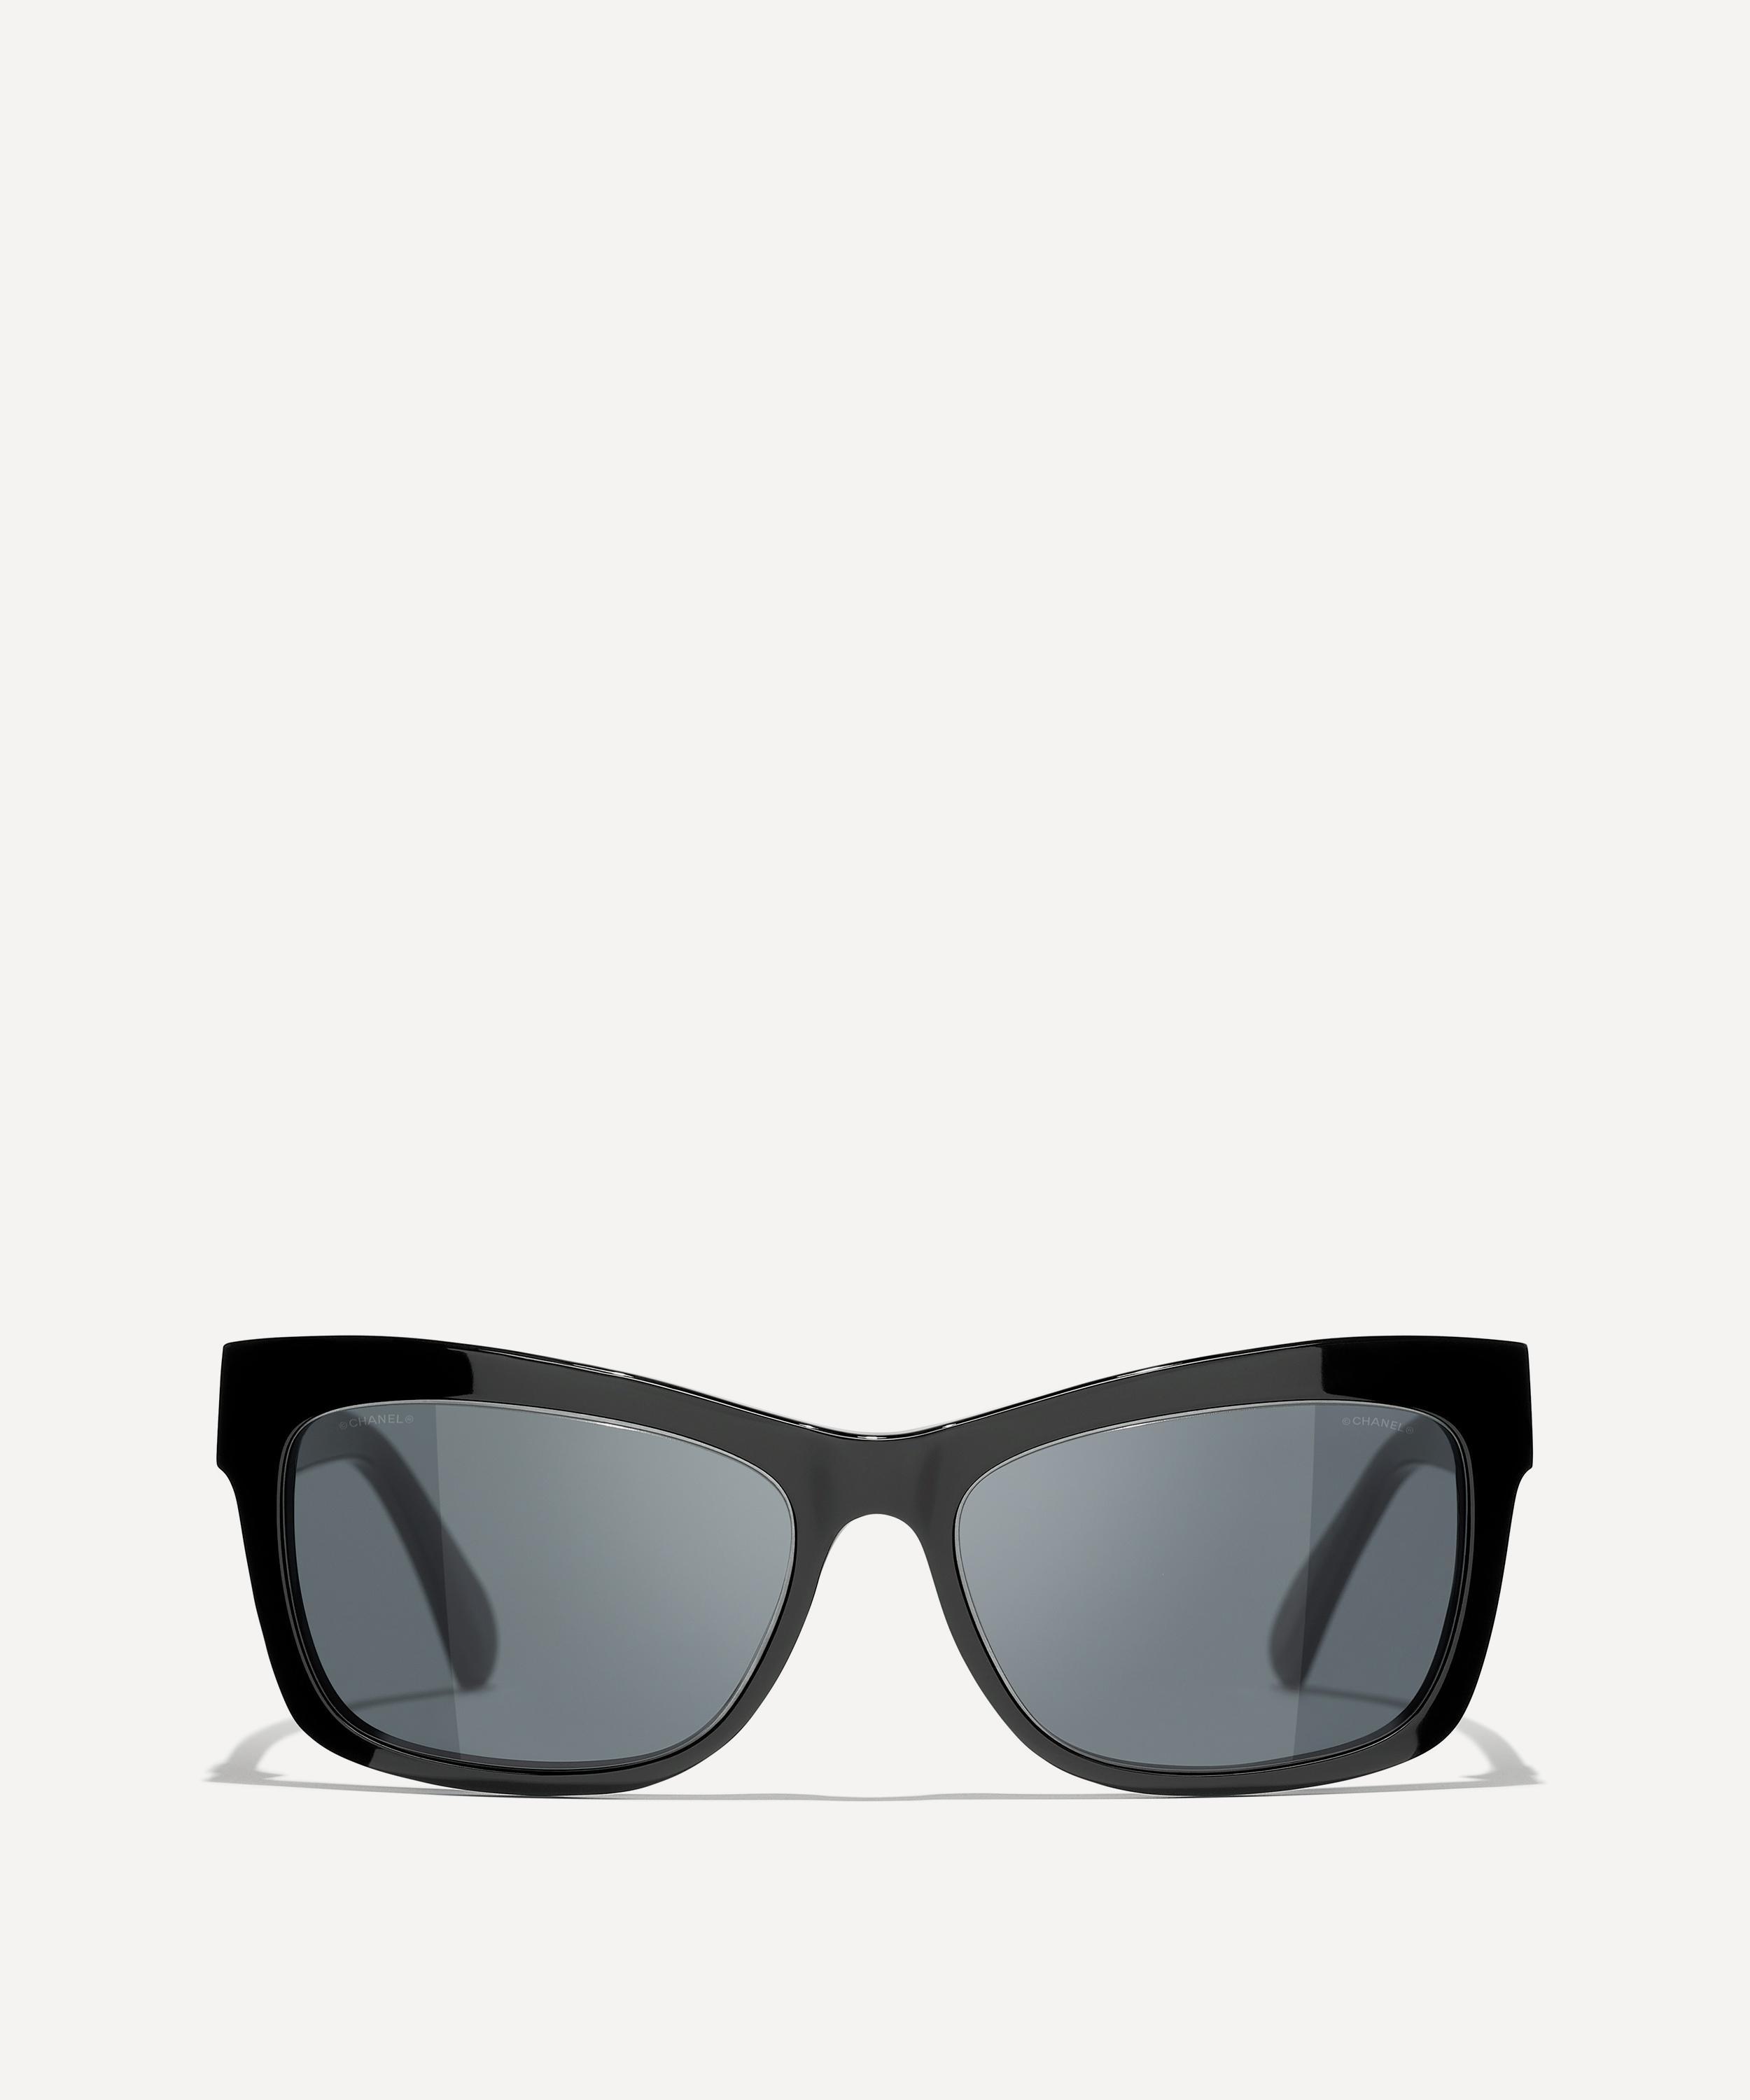 Chanel Women's Rectangular Sunglasses in Black